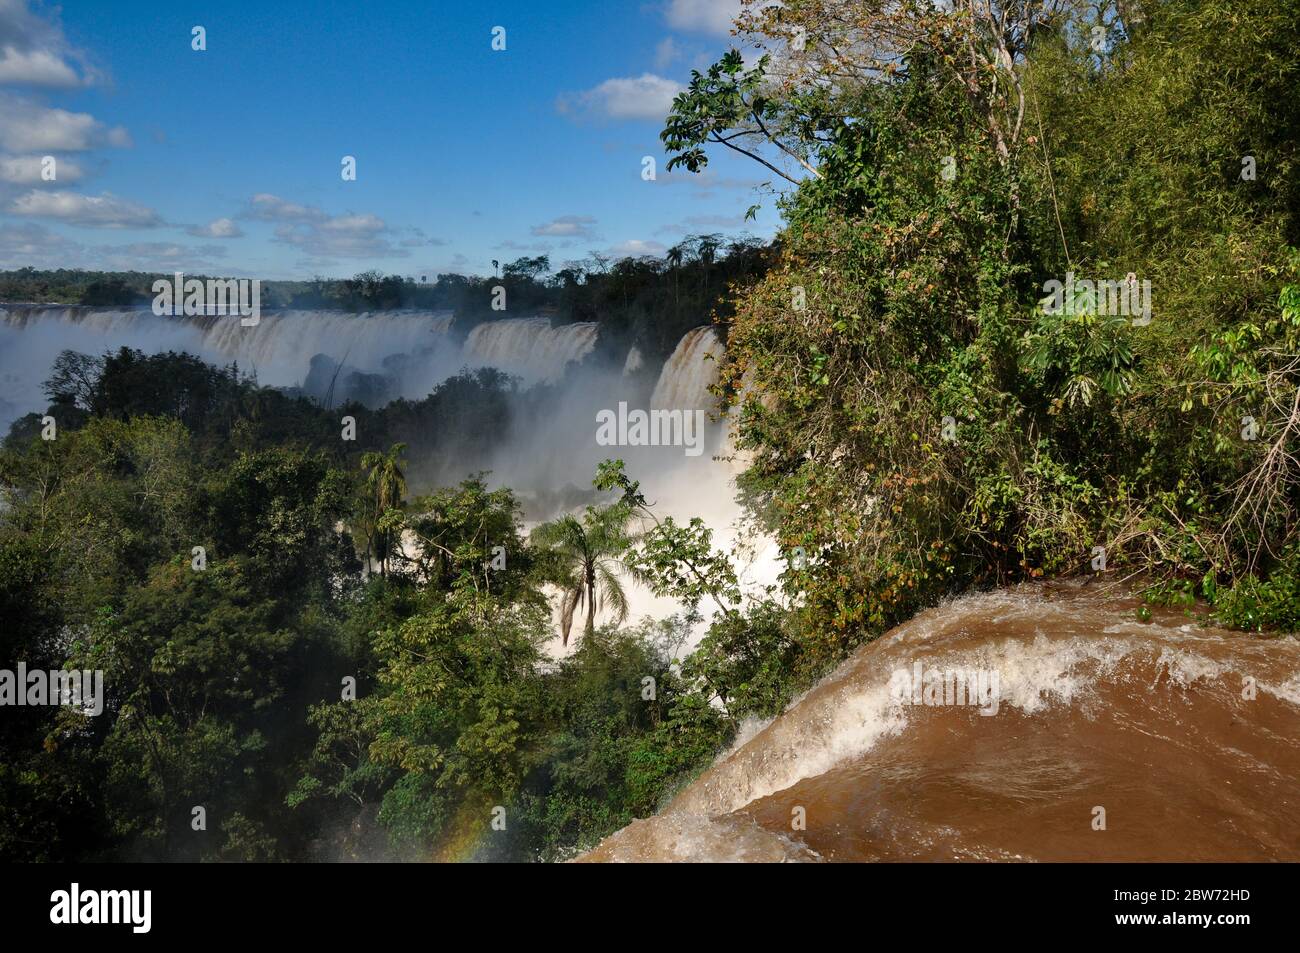 Paesaggio di grandi e belle cascate, Cataratas do Iguacu (Cascate di Iguazu), Foz do Iguacu, situato in Argentina e Brasile (stagione delle alluvioni) Foto Stock